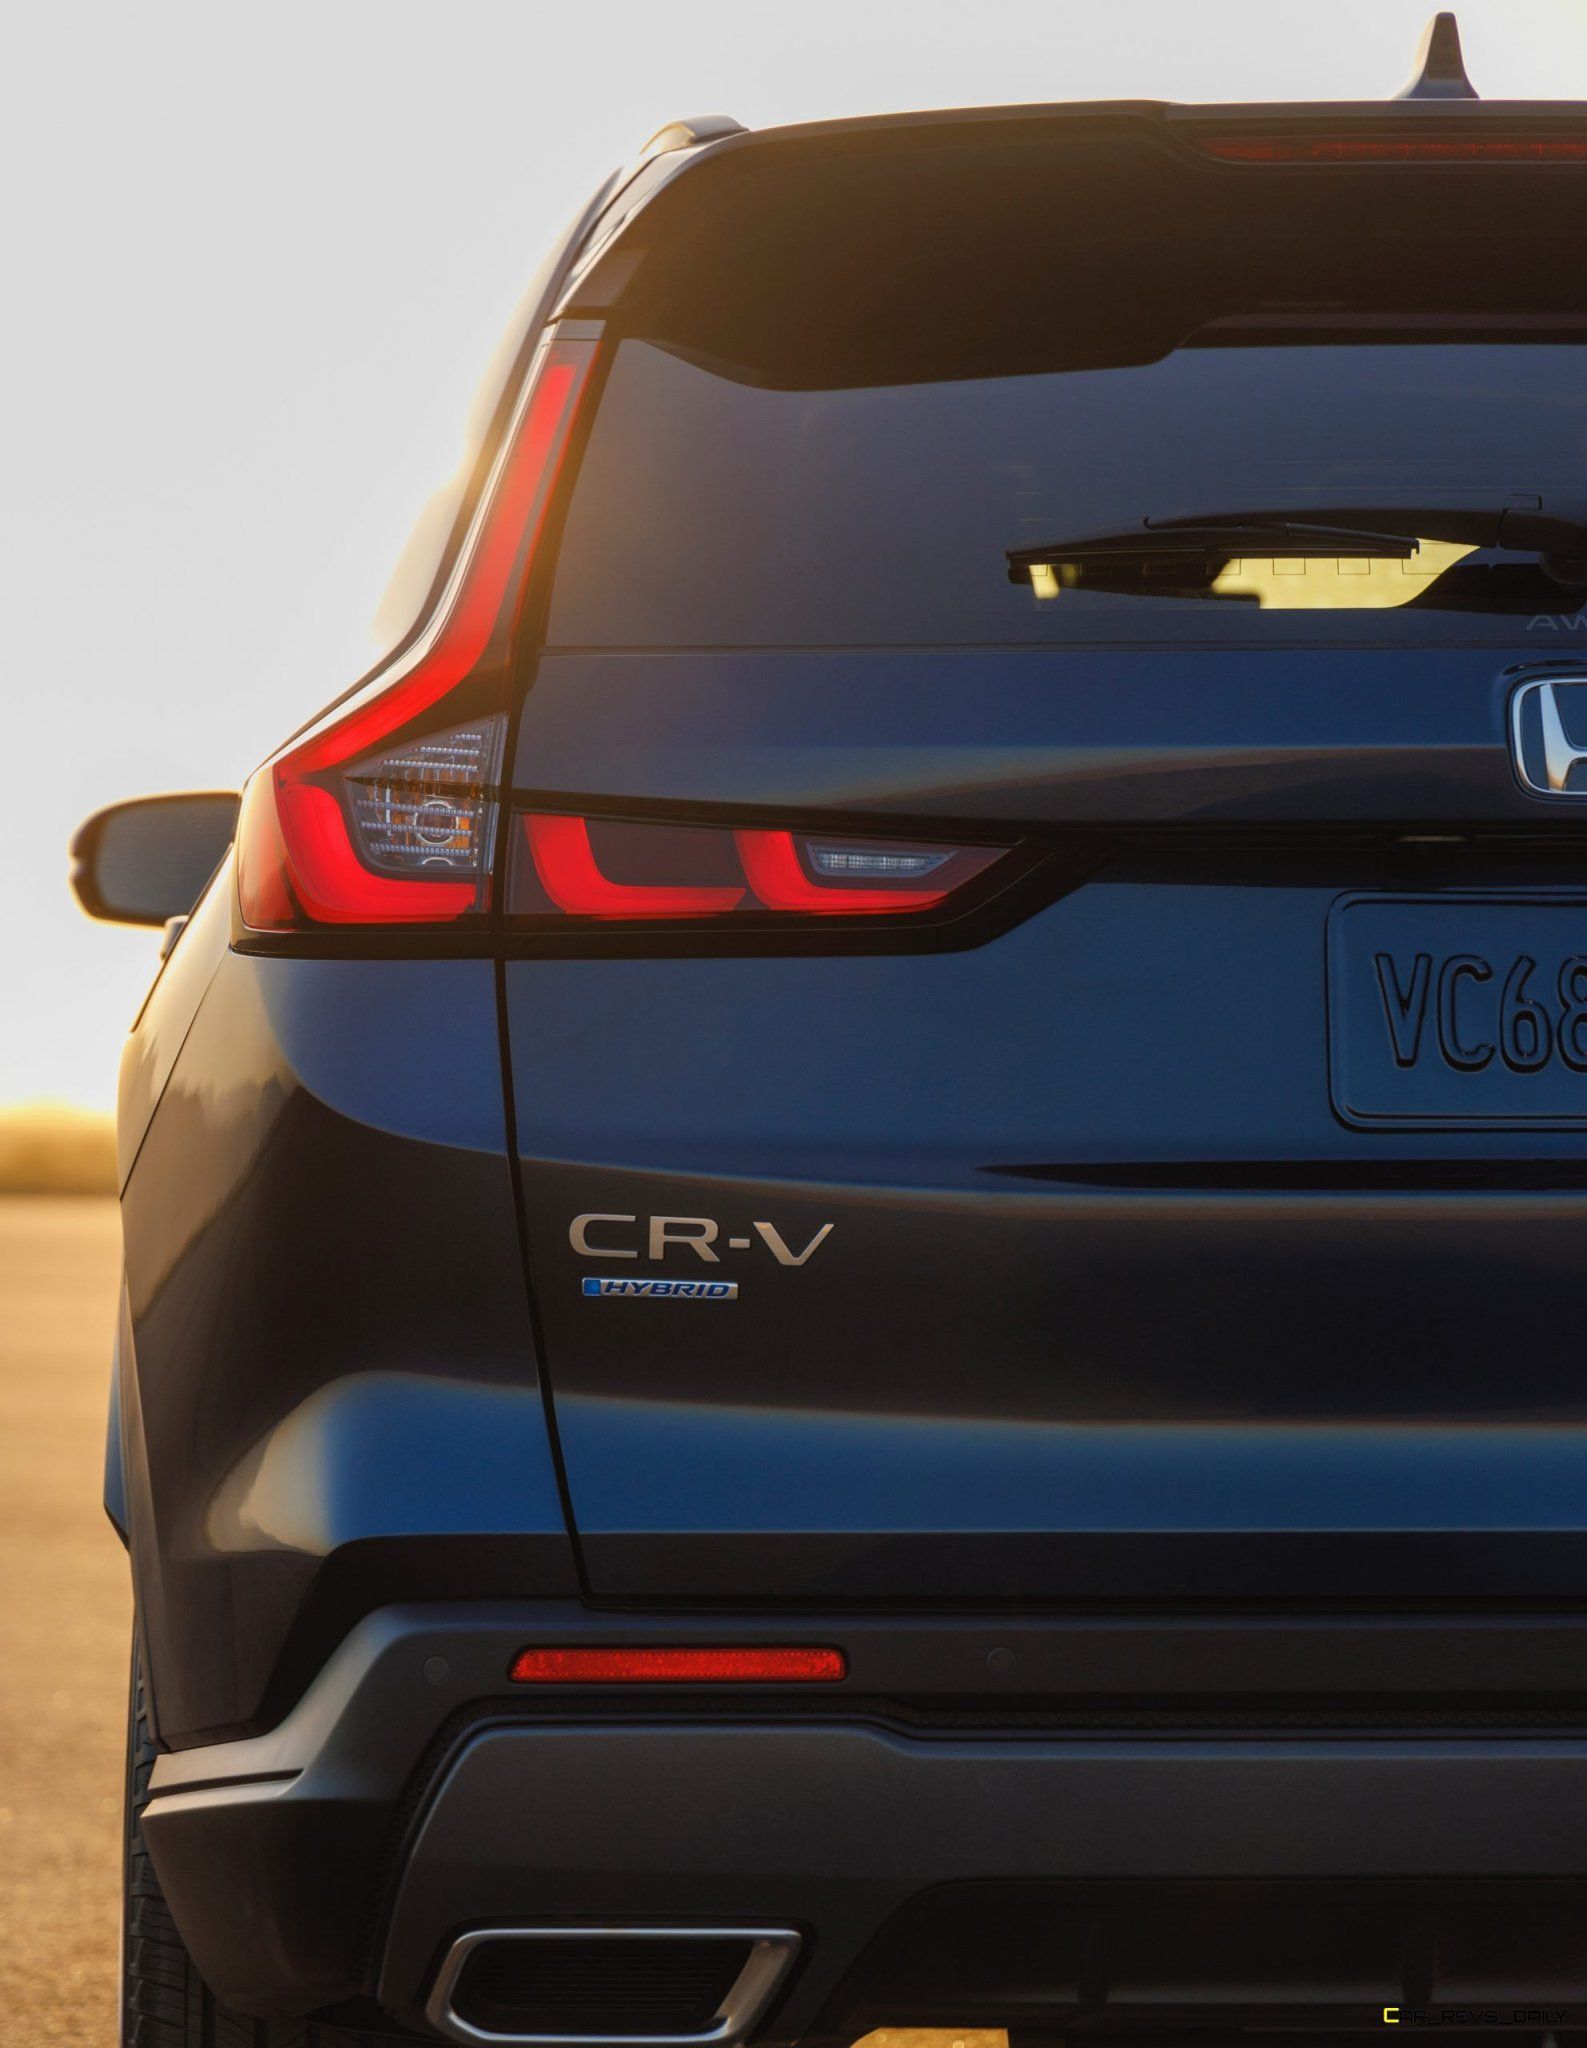  Honda CRV Hintergrundbild 1587x2048. Honda CR V Brings Fresher Looks, New Technology To Model In 2023. Honda Cr, Honda, Honda Crv